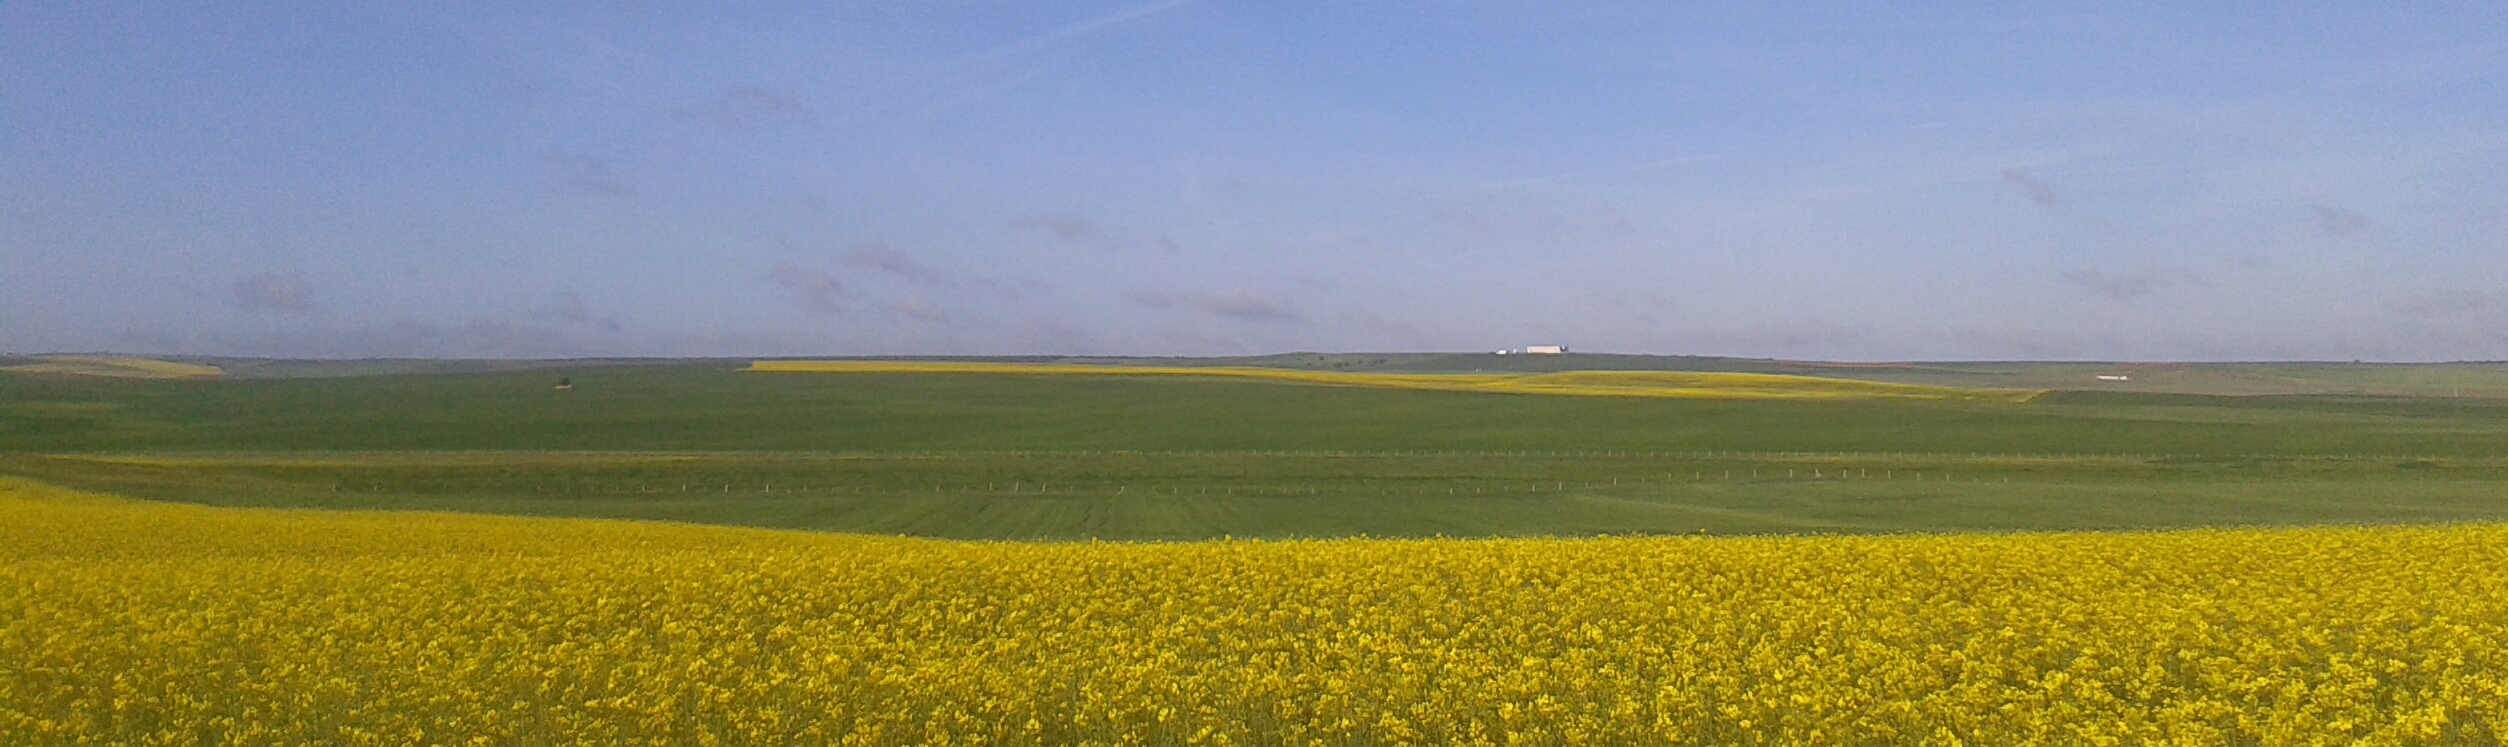 Rapeseed fields near Salamanca